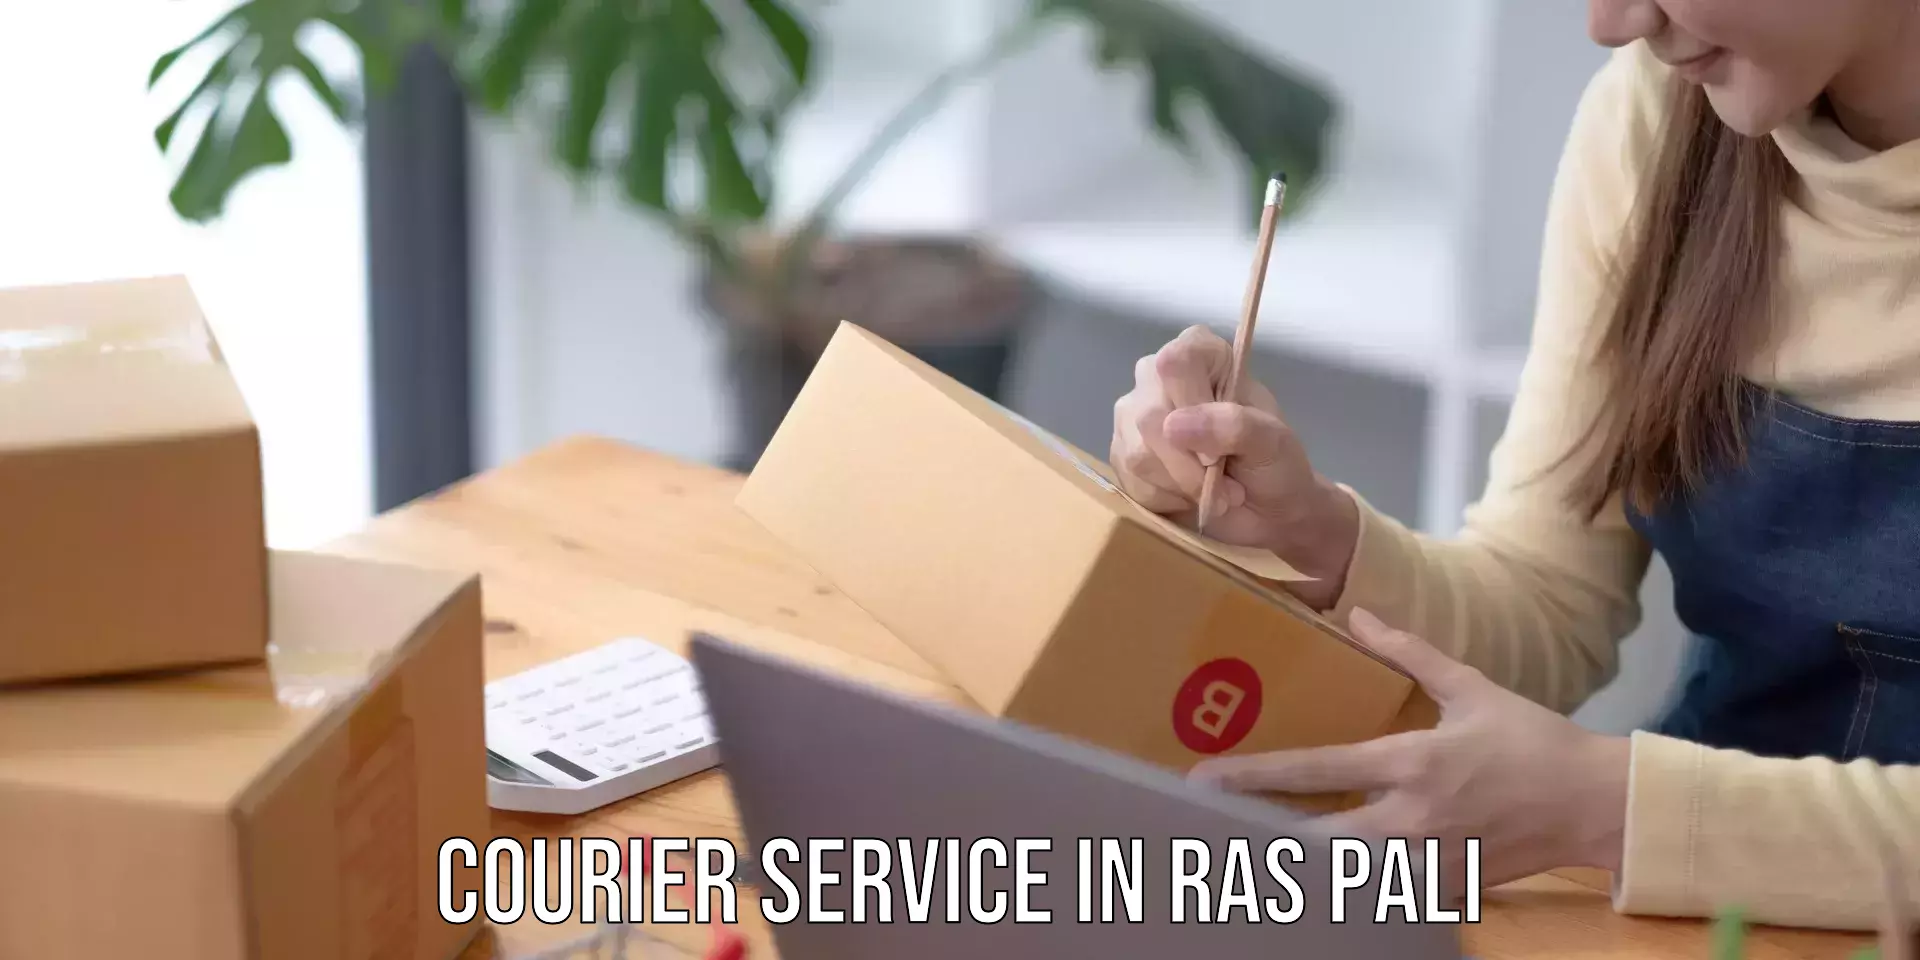 Bulk courier orders in Ras Pali